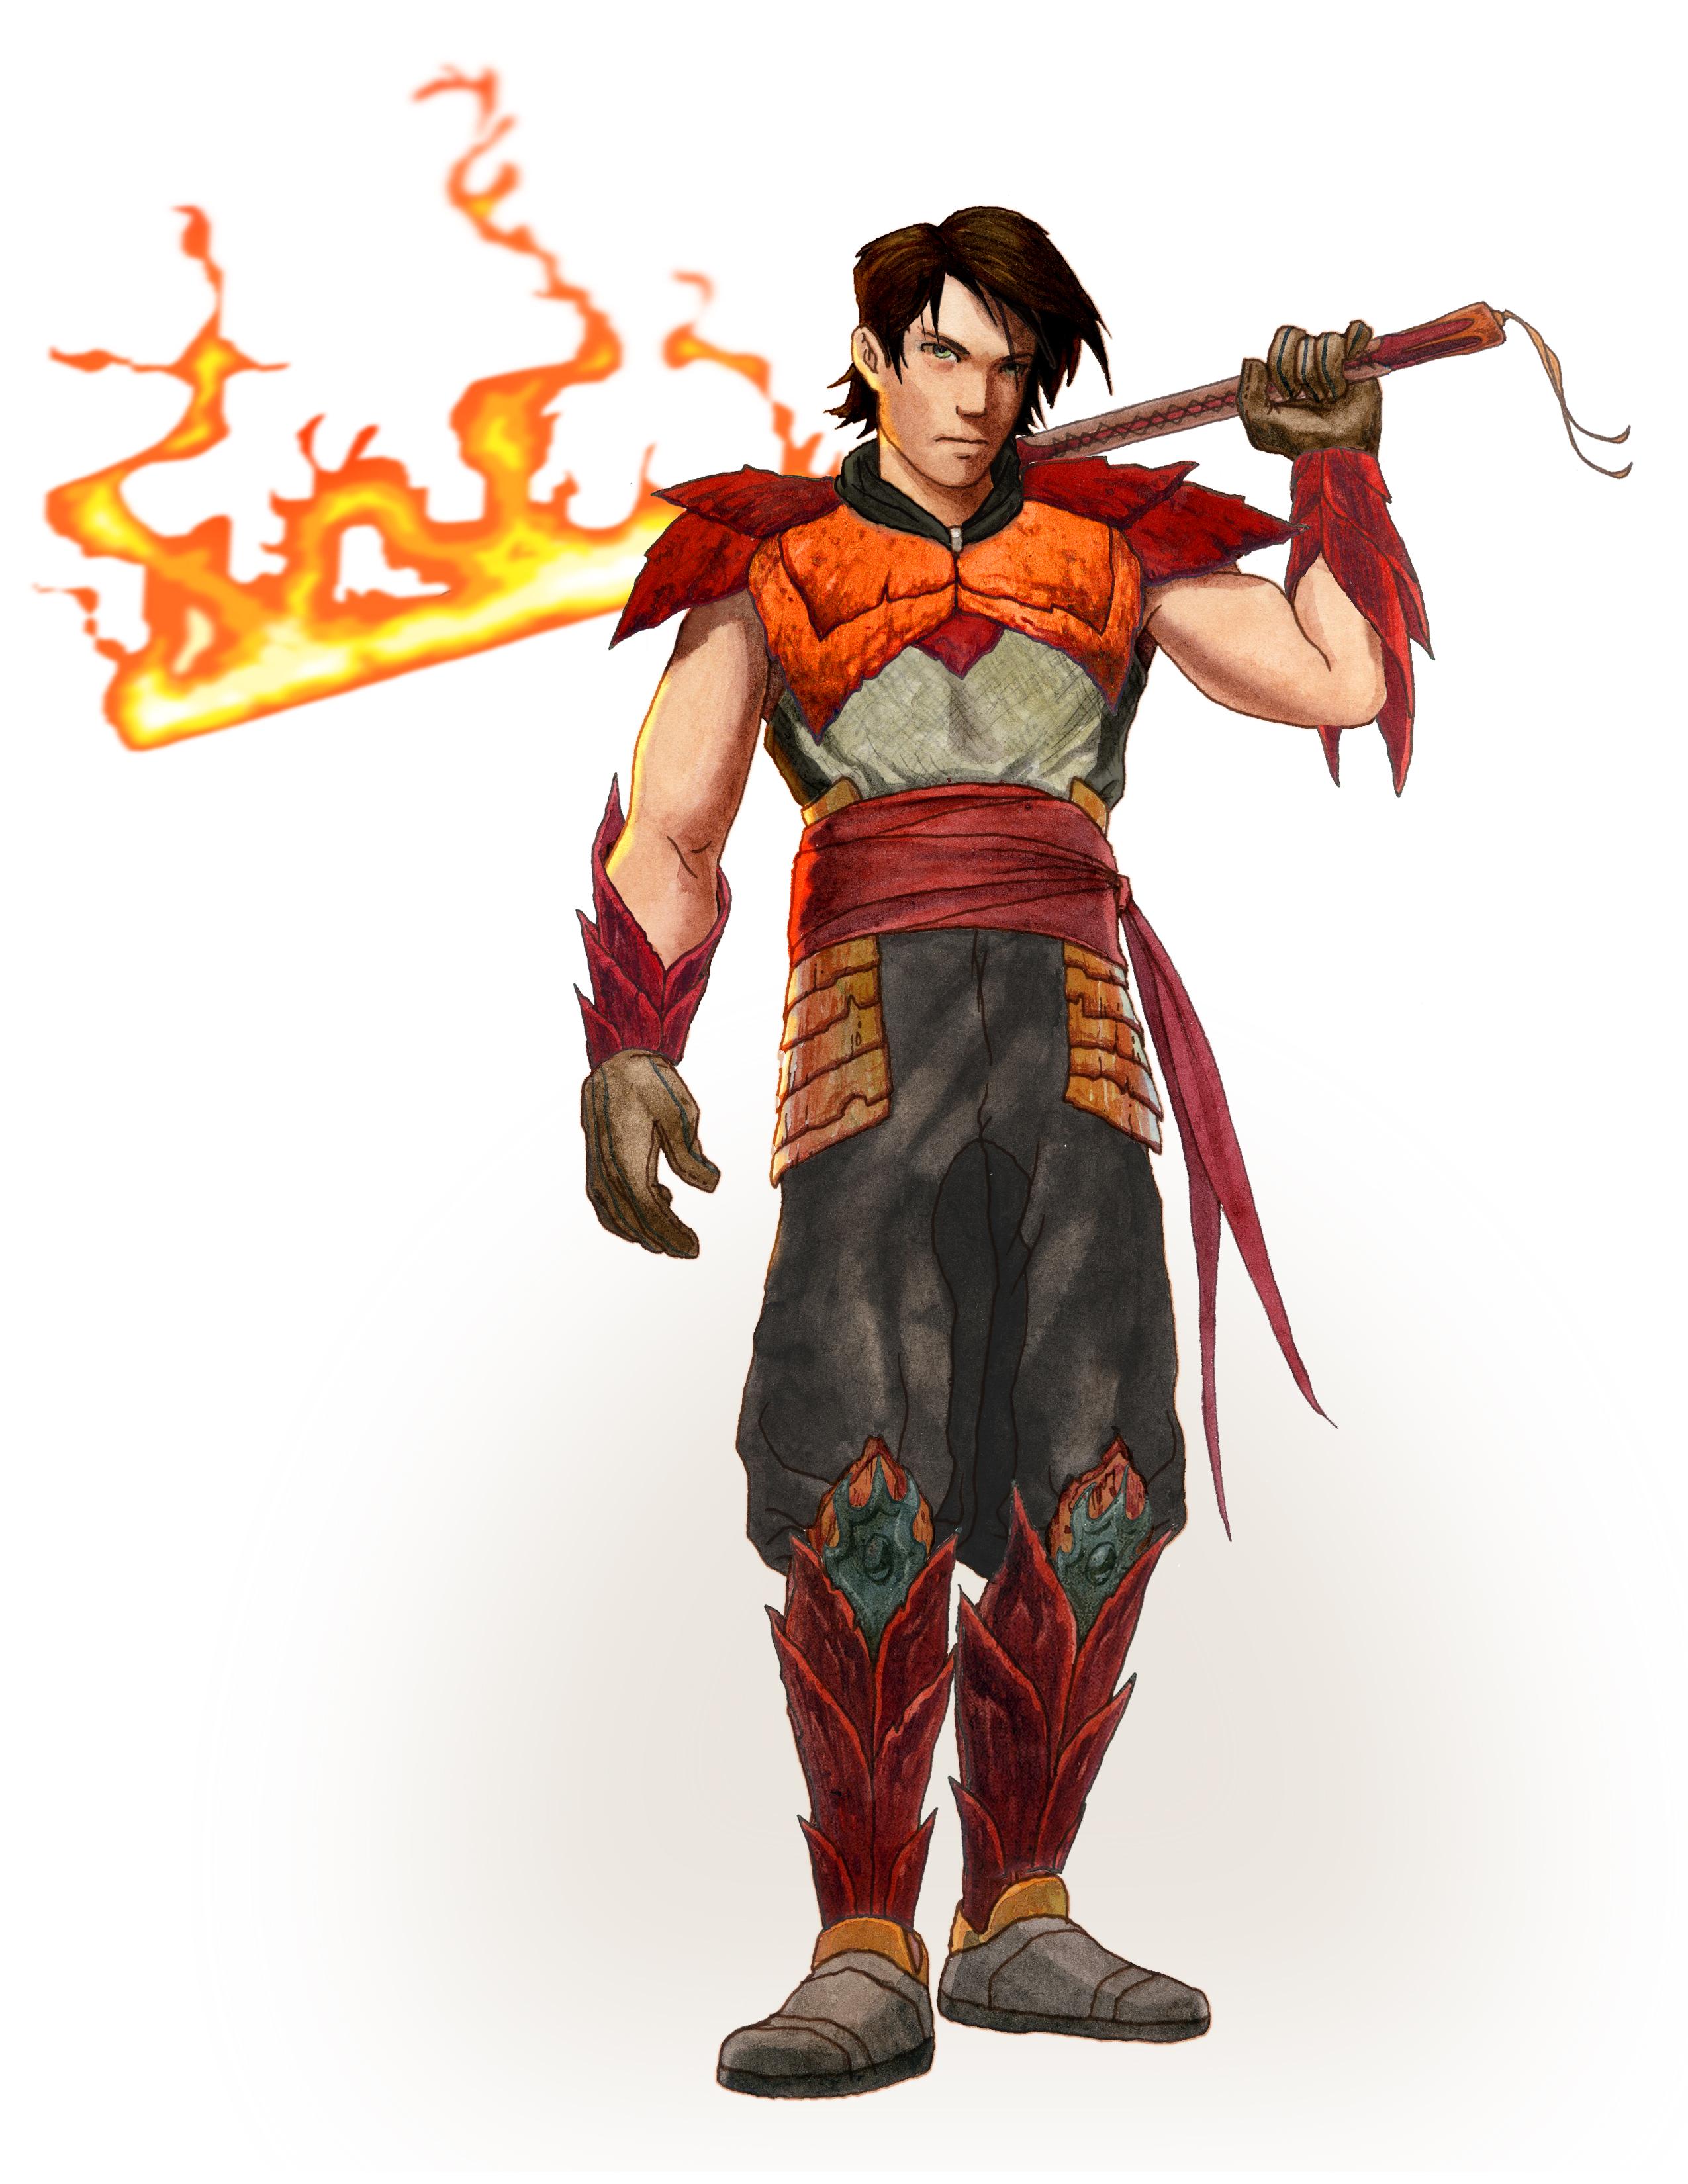 Dragon Blade: Wrath of Fire - Wikipedia